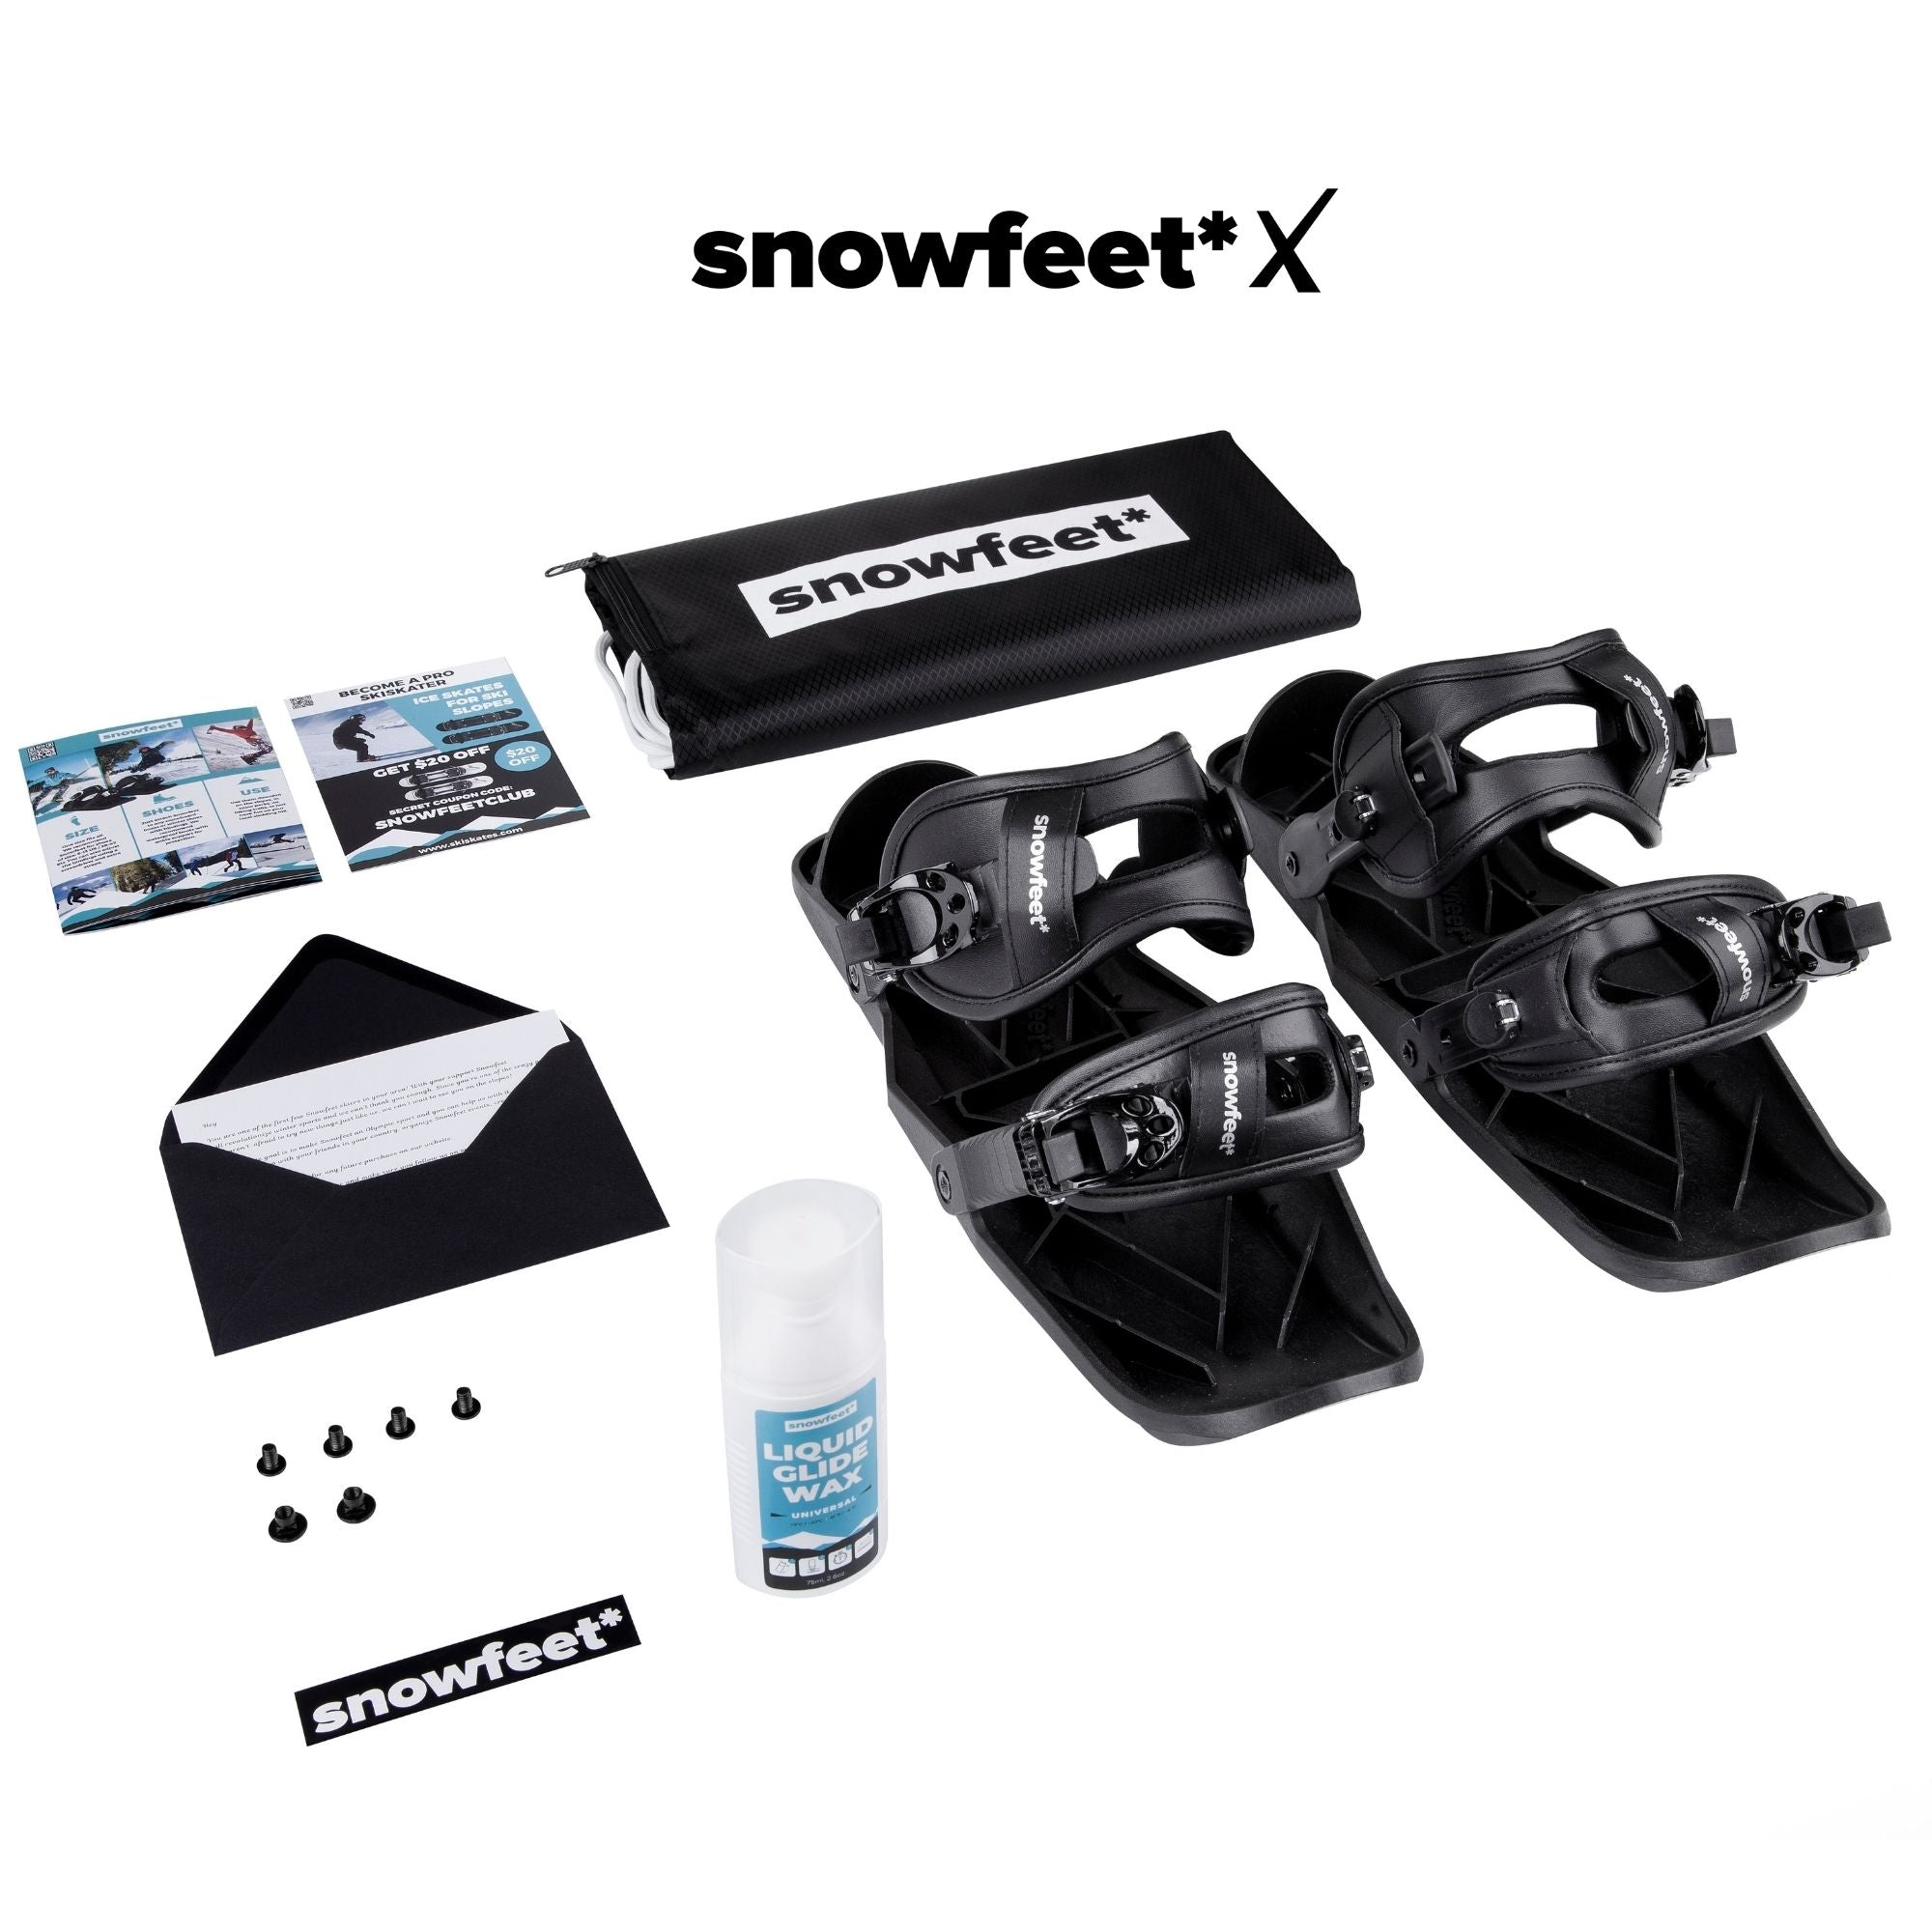 snowfee X mini ski skates for snow package